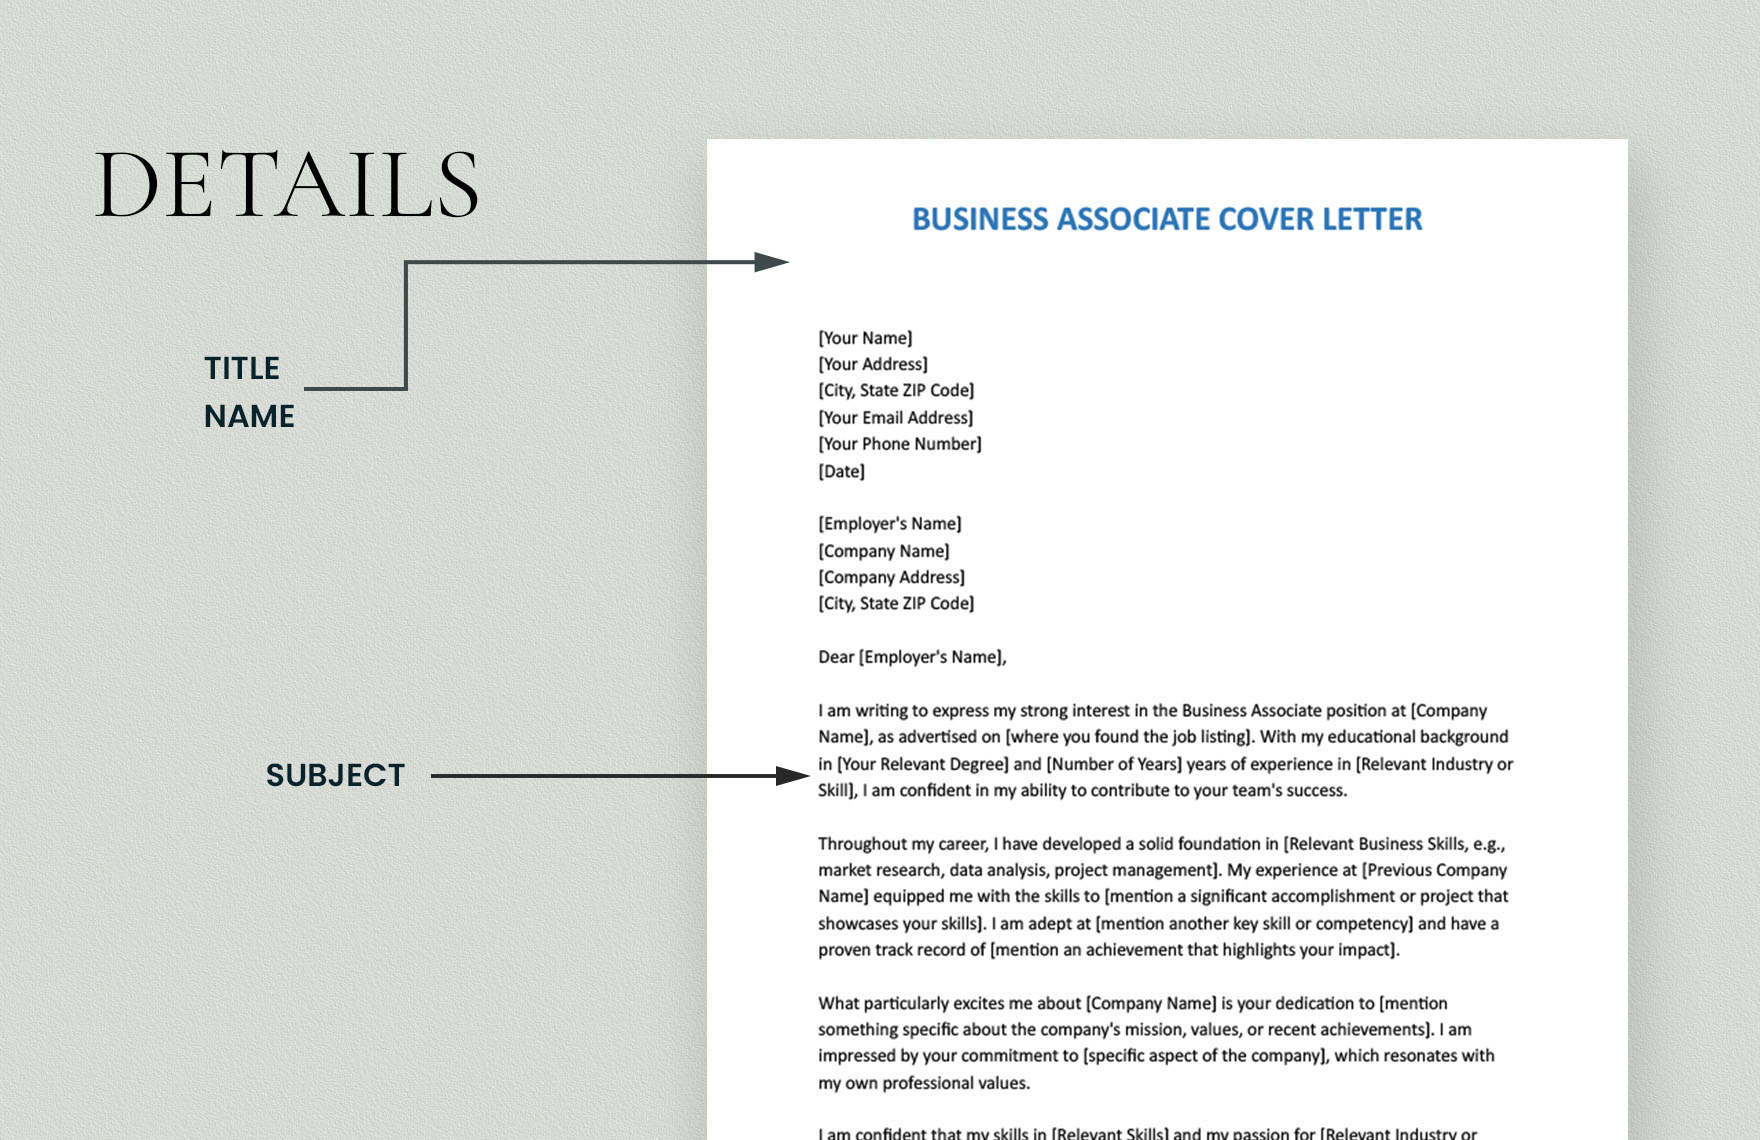 Business Associate Cover Letter